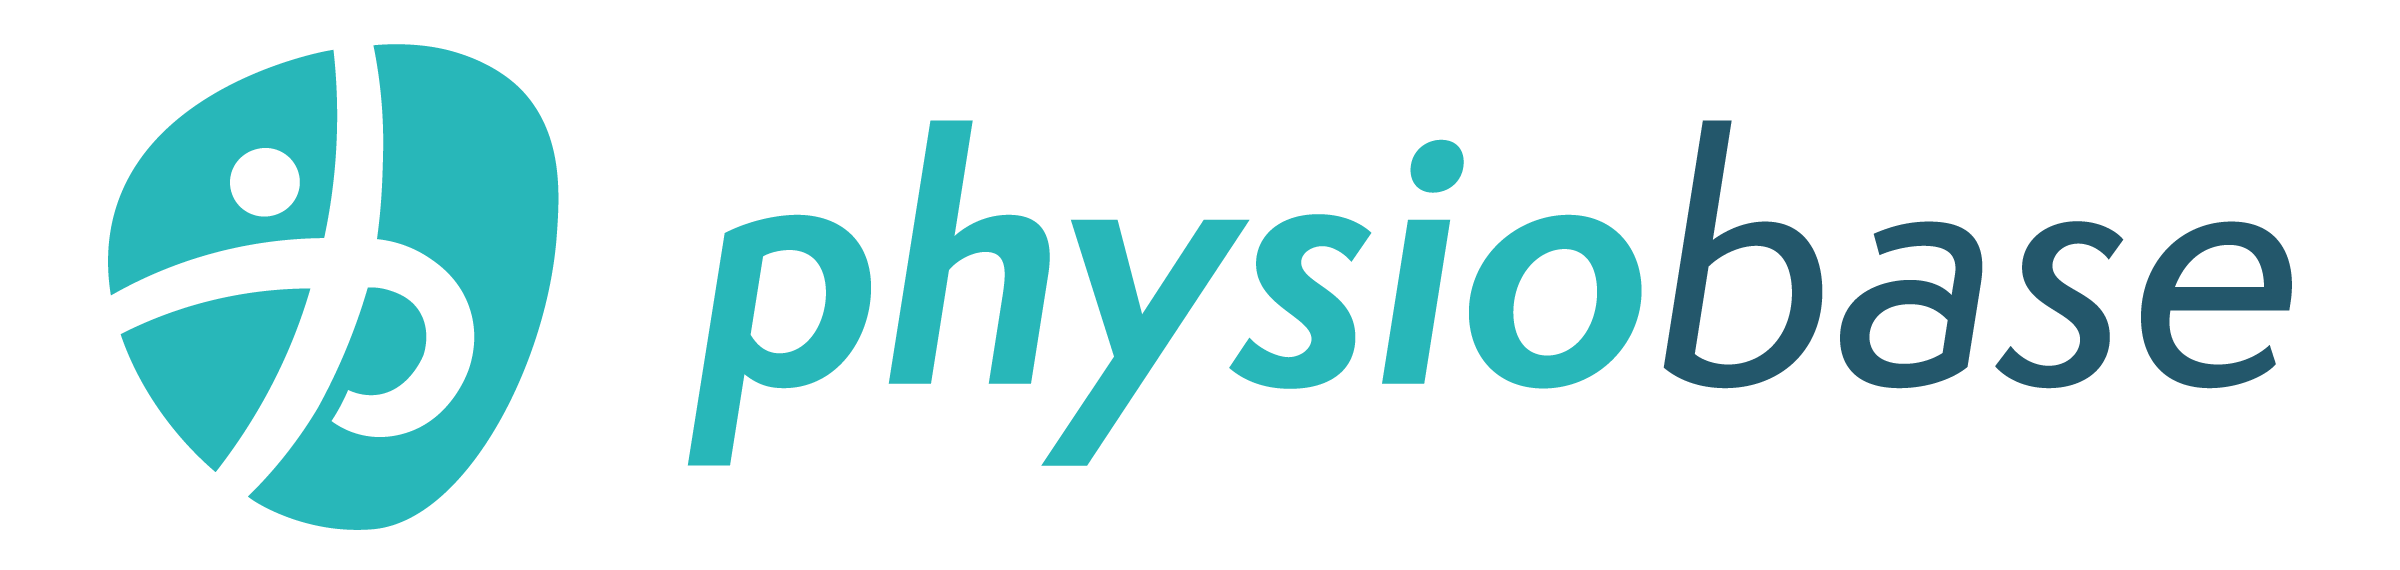 Physiobase-Logo